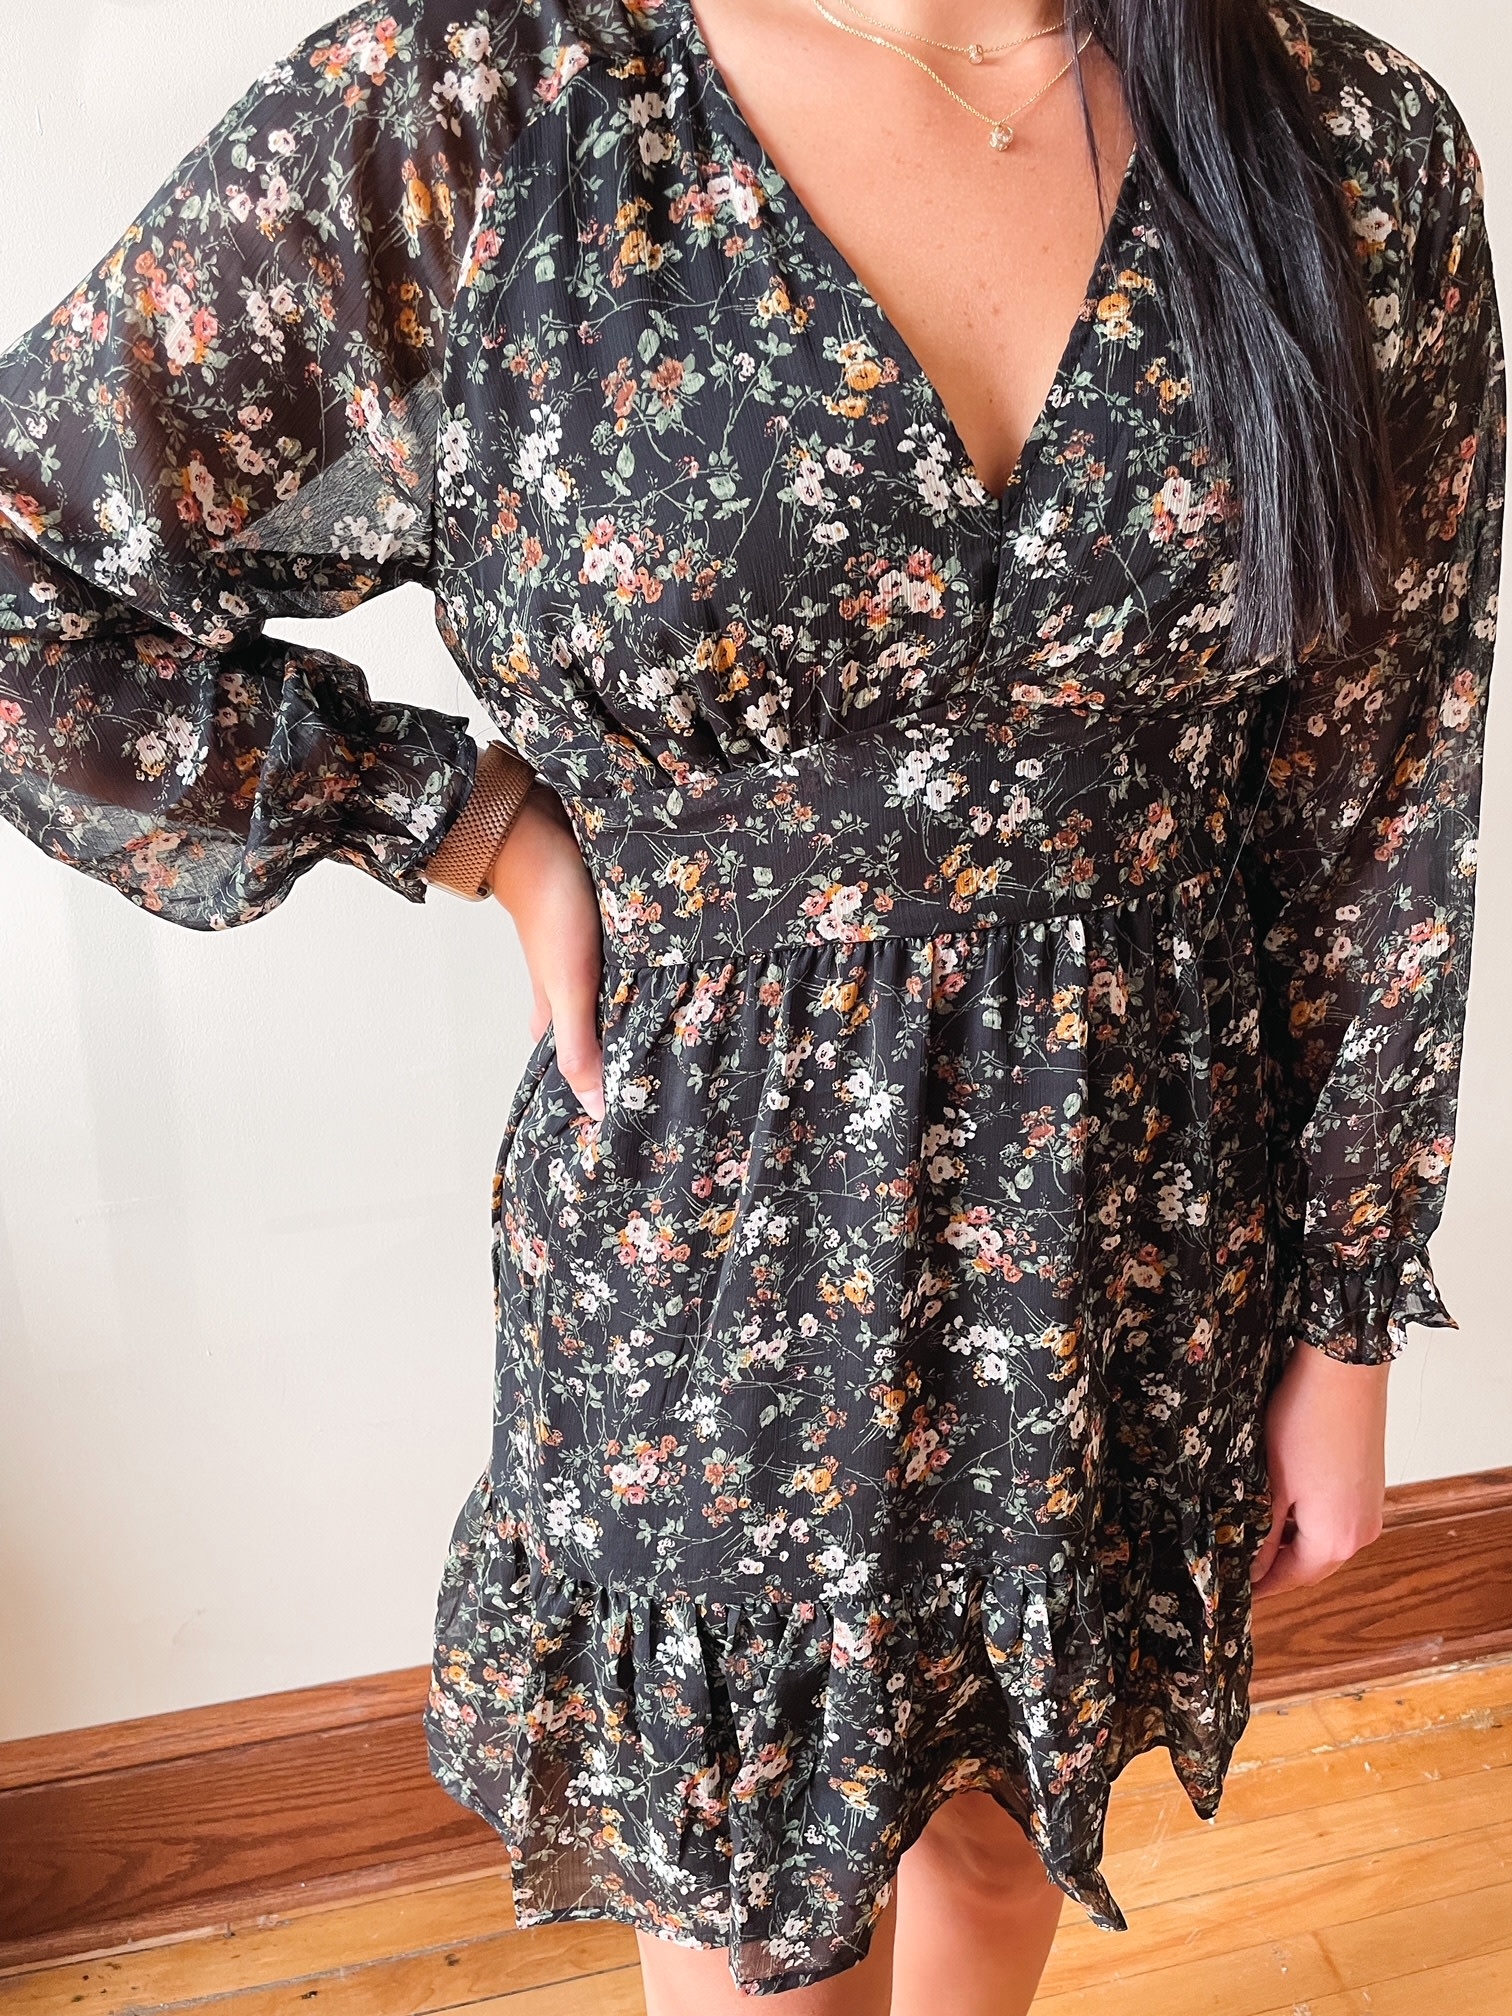 Elle Black Floral Dress - Urban Threads Clothing Boutique